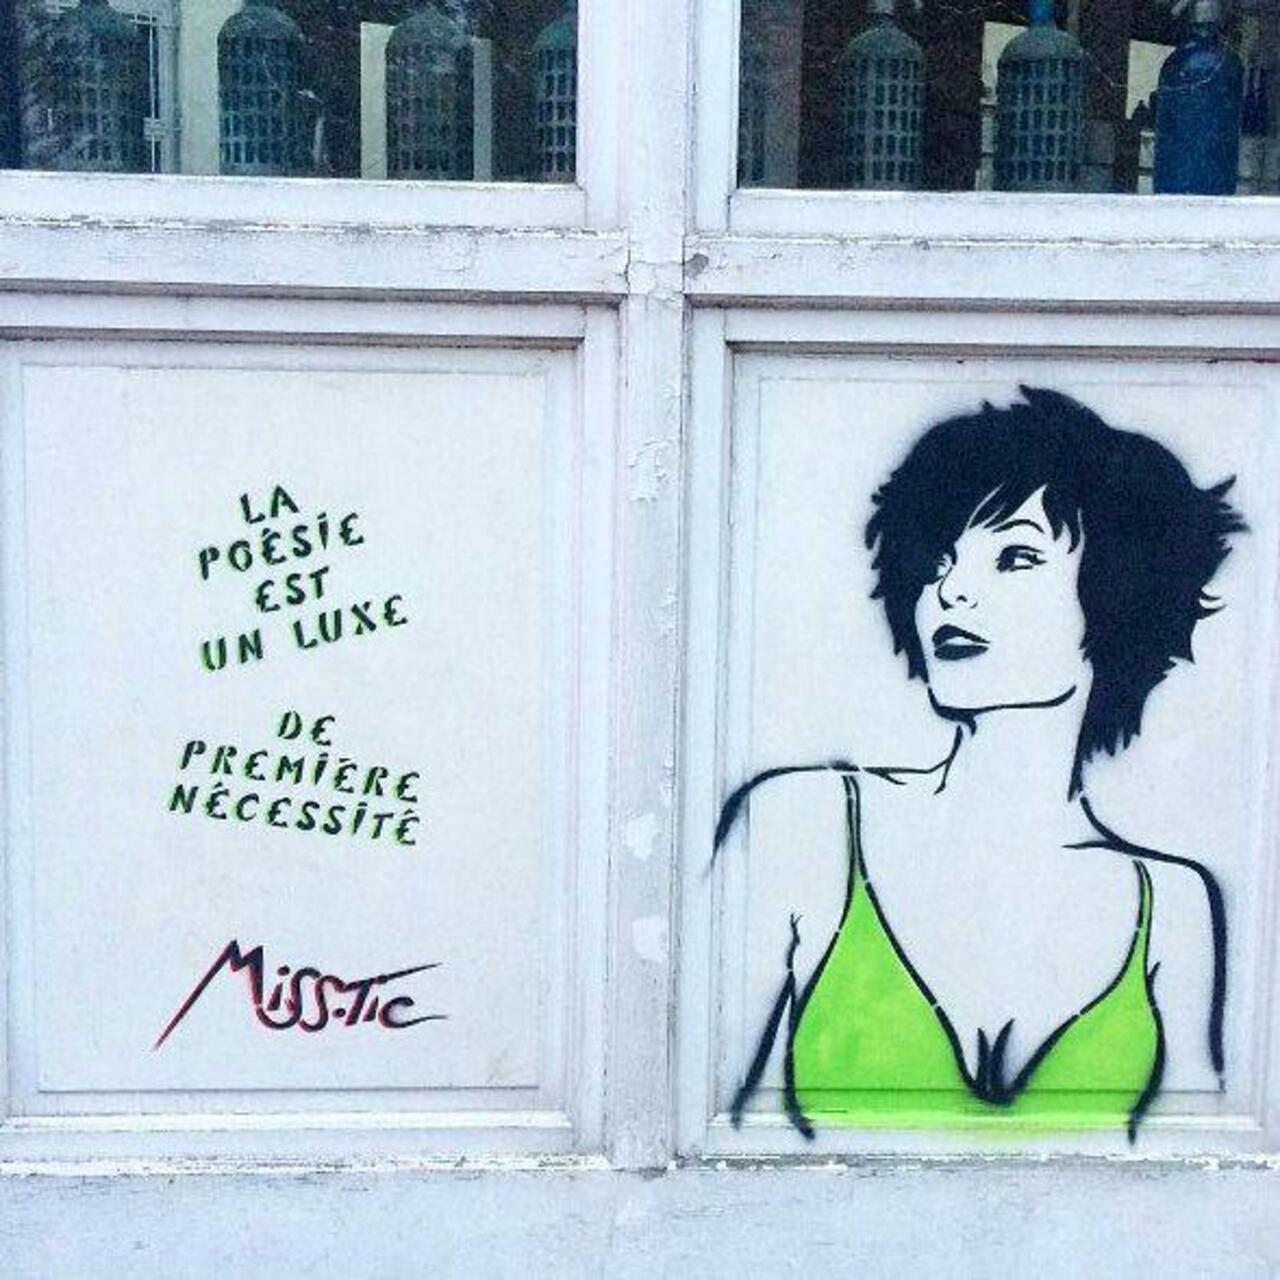 RT @SrbijaPutovanja: http://ift.tt/1KiqpQt #Paris #graffiti photo by senyorerre http://ift.tt/1GJjlIT #StreetArt http://t.co/lNDnQOoAMf